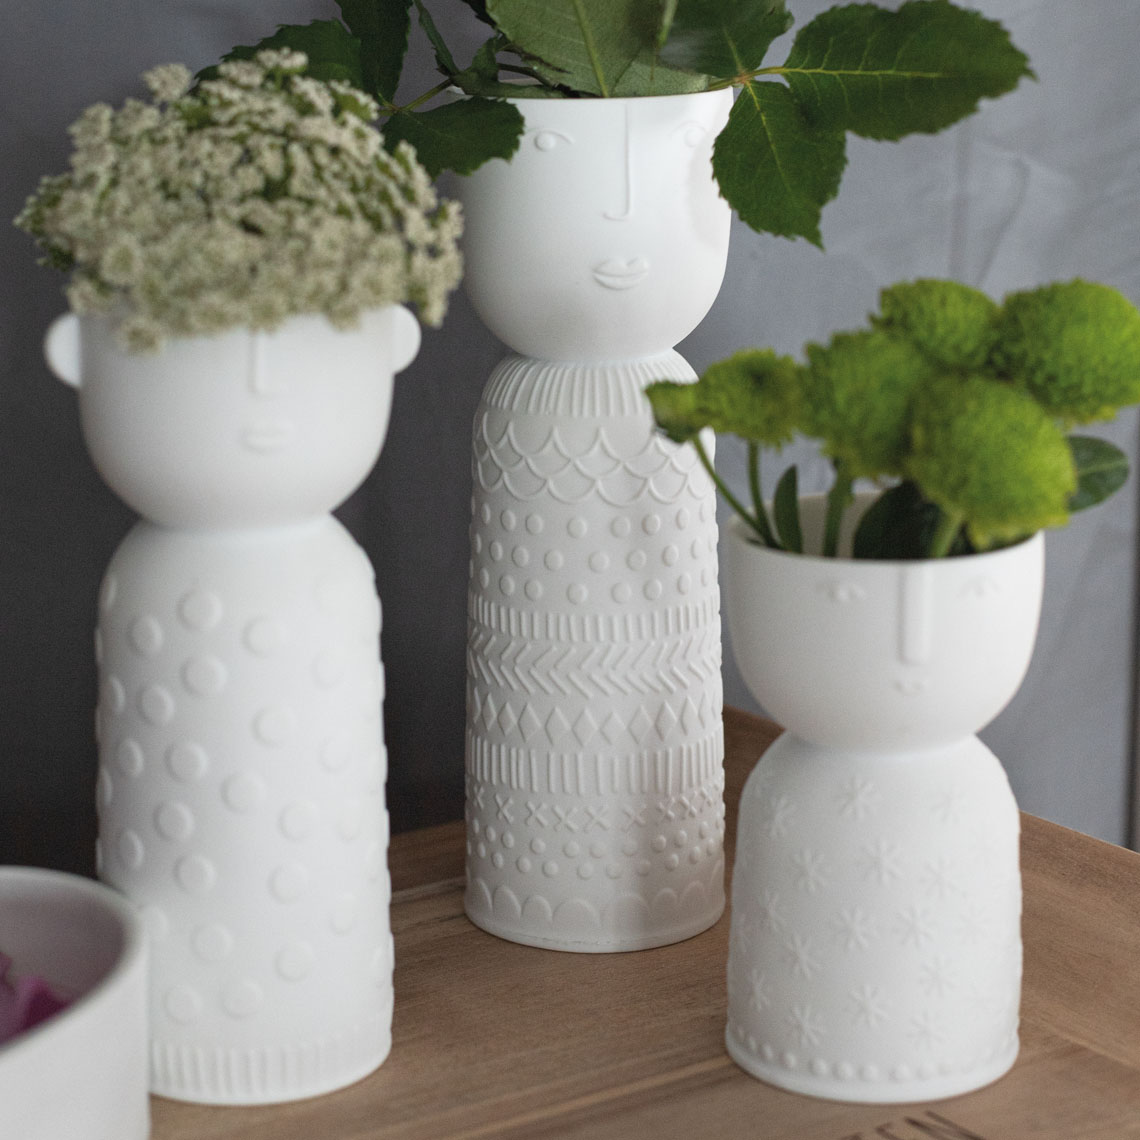 Living Naturgestalten Vasen in verschiedenen Ausführungen